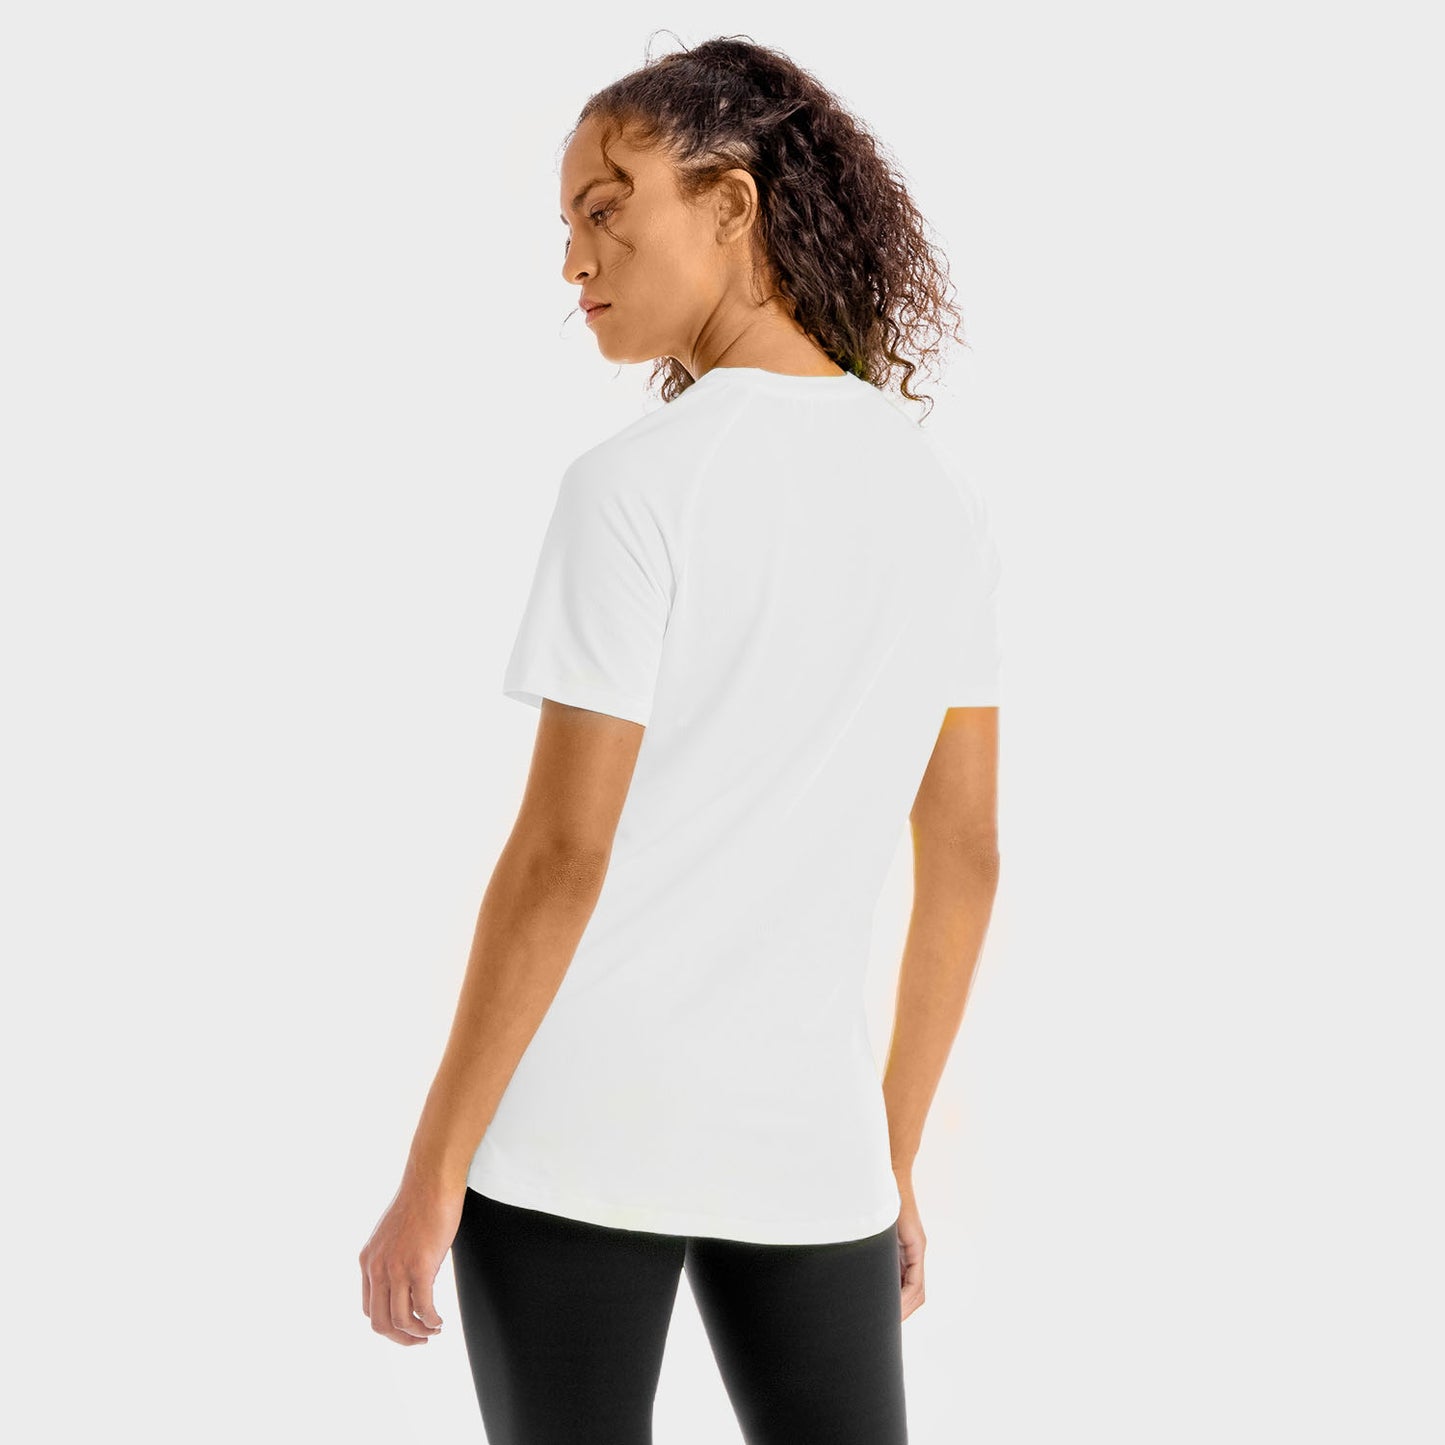 AE | Core Mesh Tee - White | Workout Shirts Women | SQUATWOLF